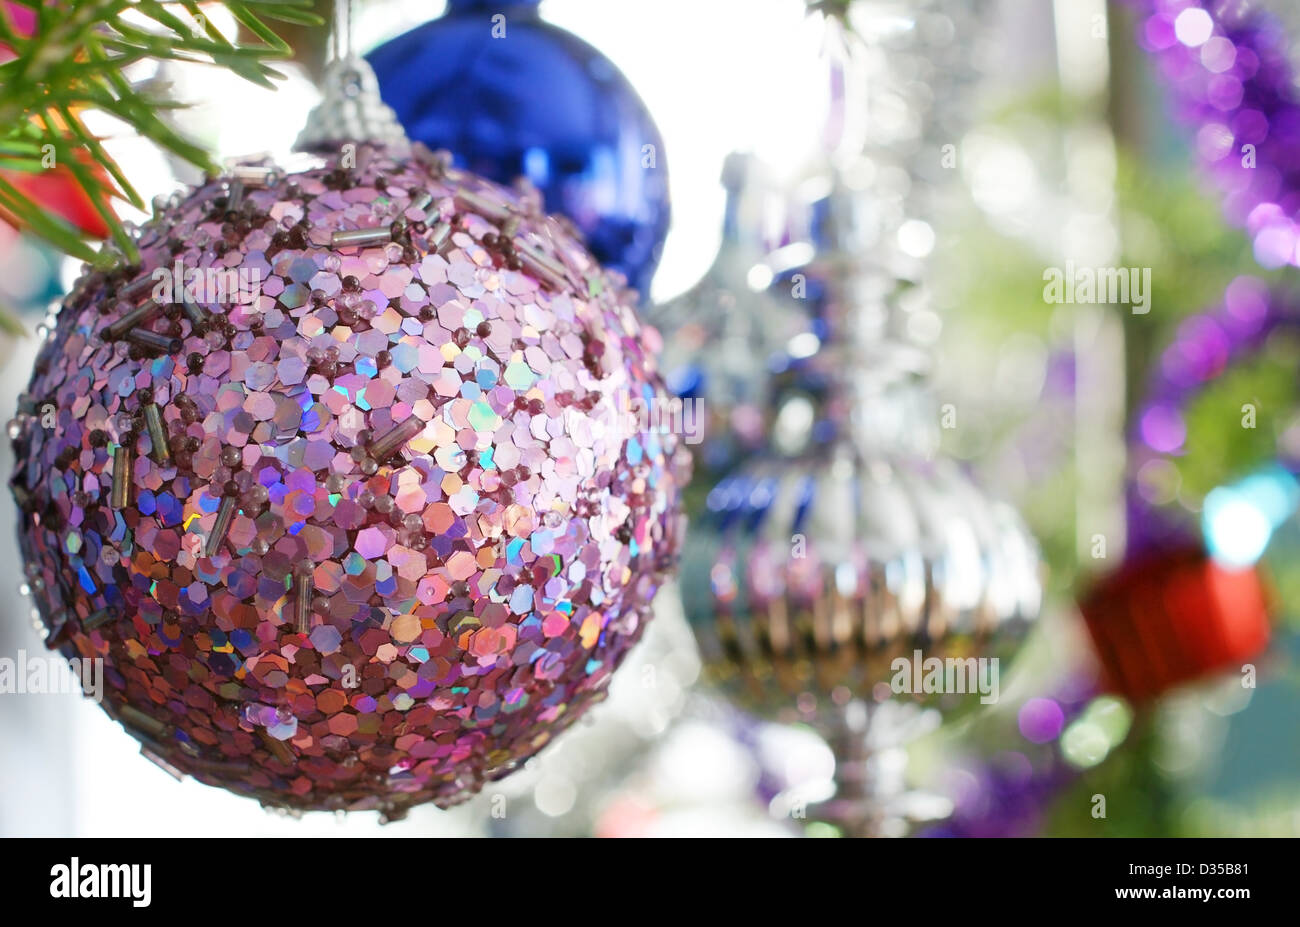 Christmas ornament Stock Photo